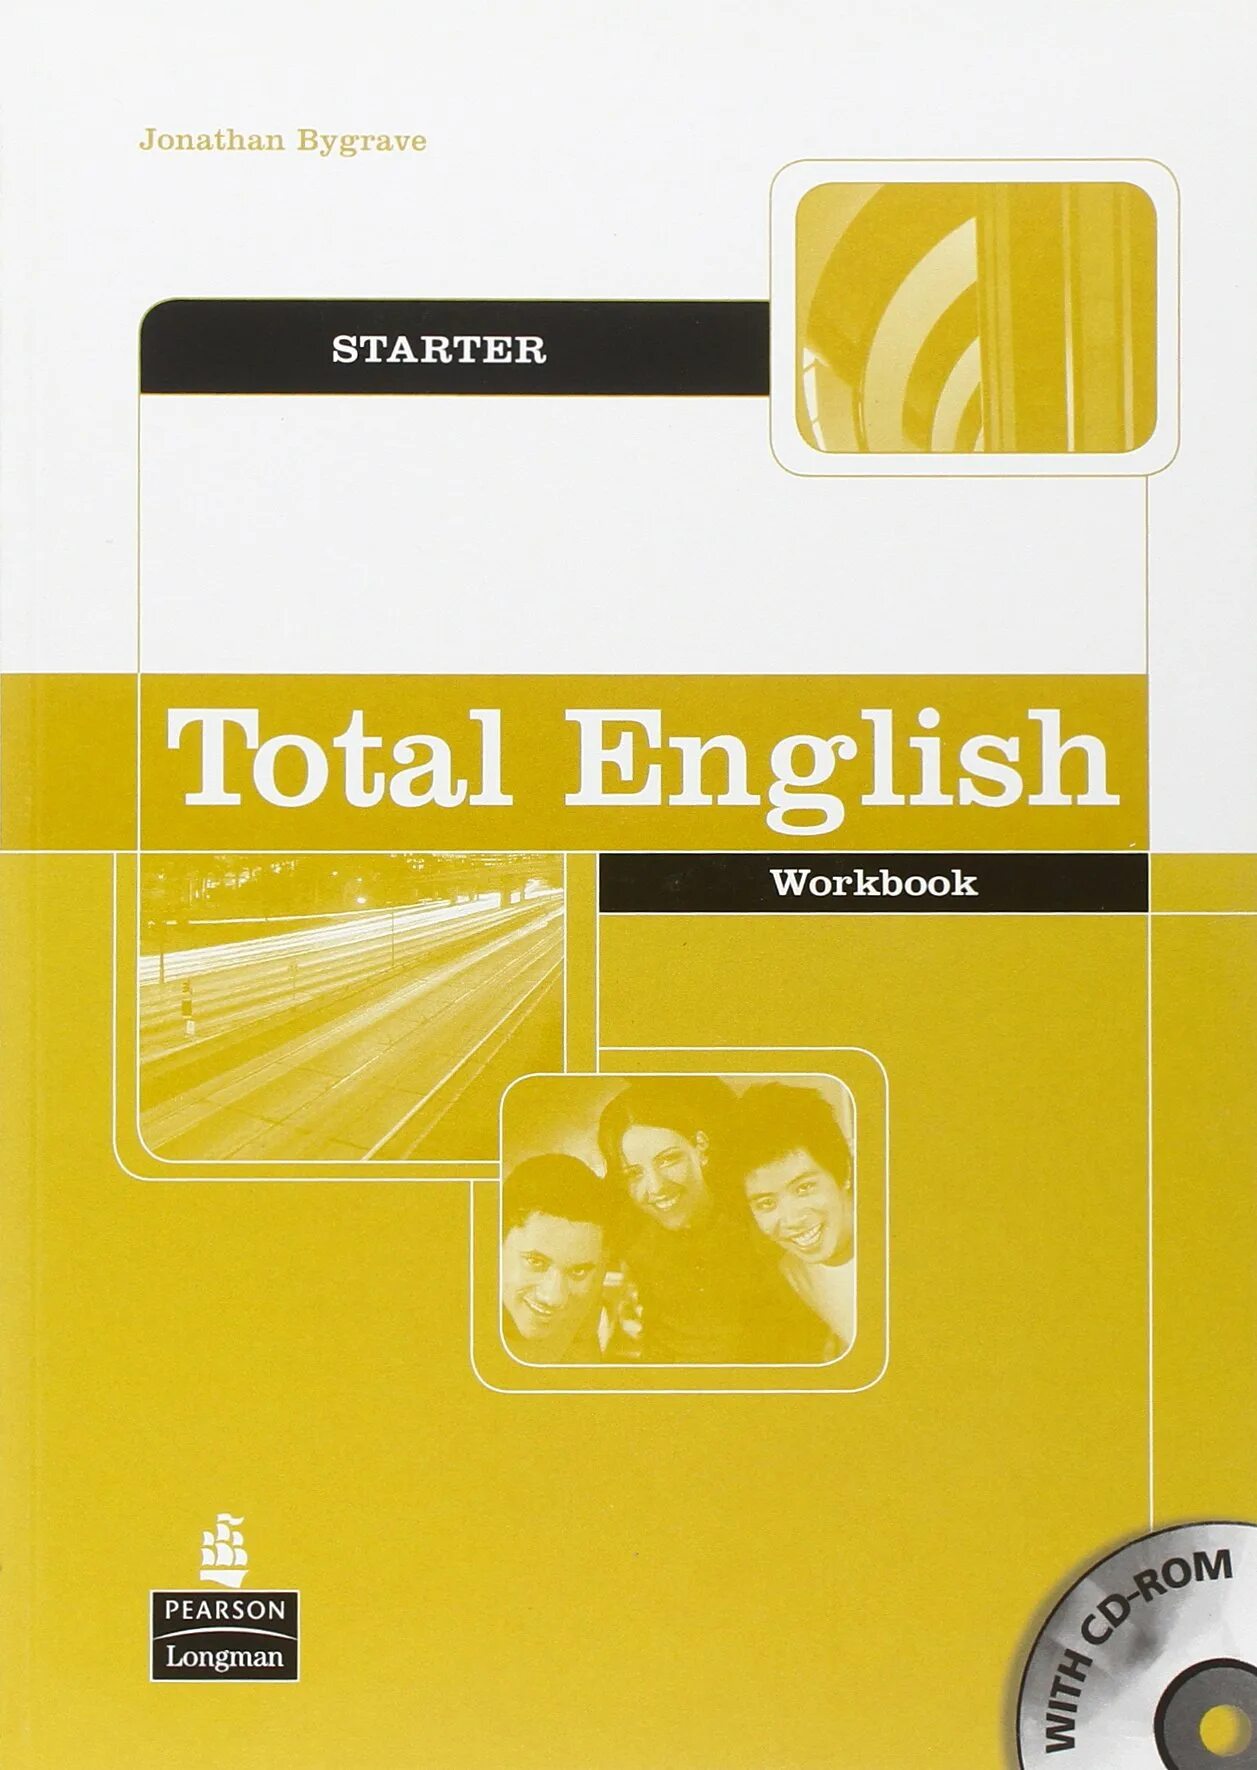 Пособия Pearson total English. Total English Starter. New total English. Starter. New total English Workbook. Total english workbook